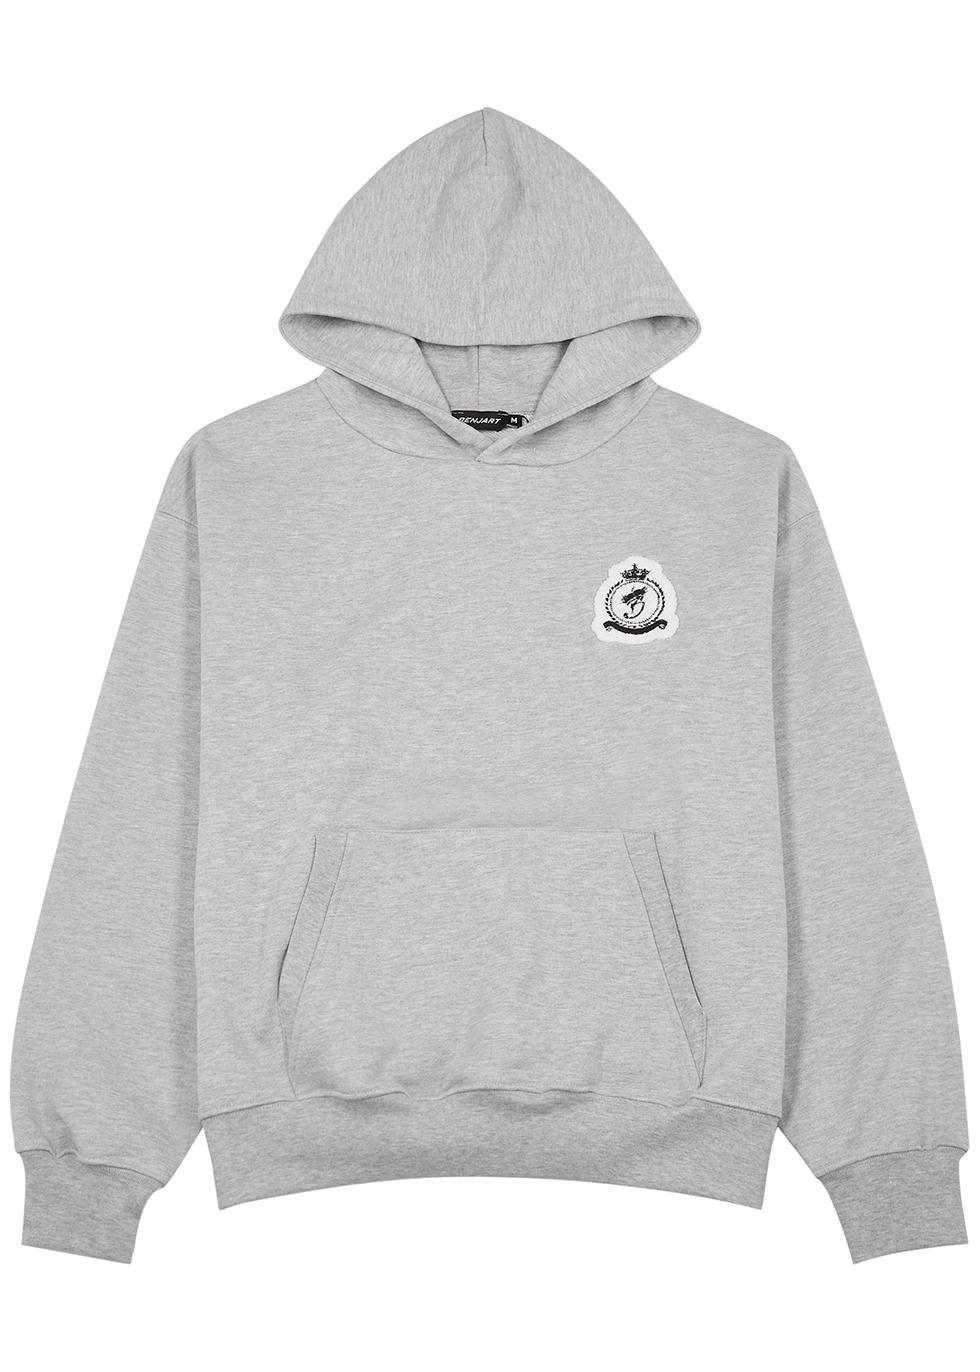 Grey logo hoodied cotton-blend sweatshirt by BENJART